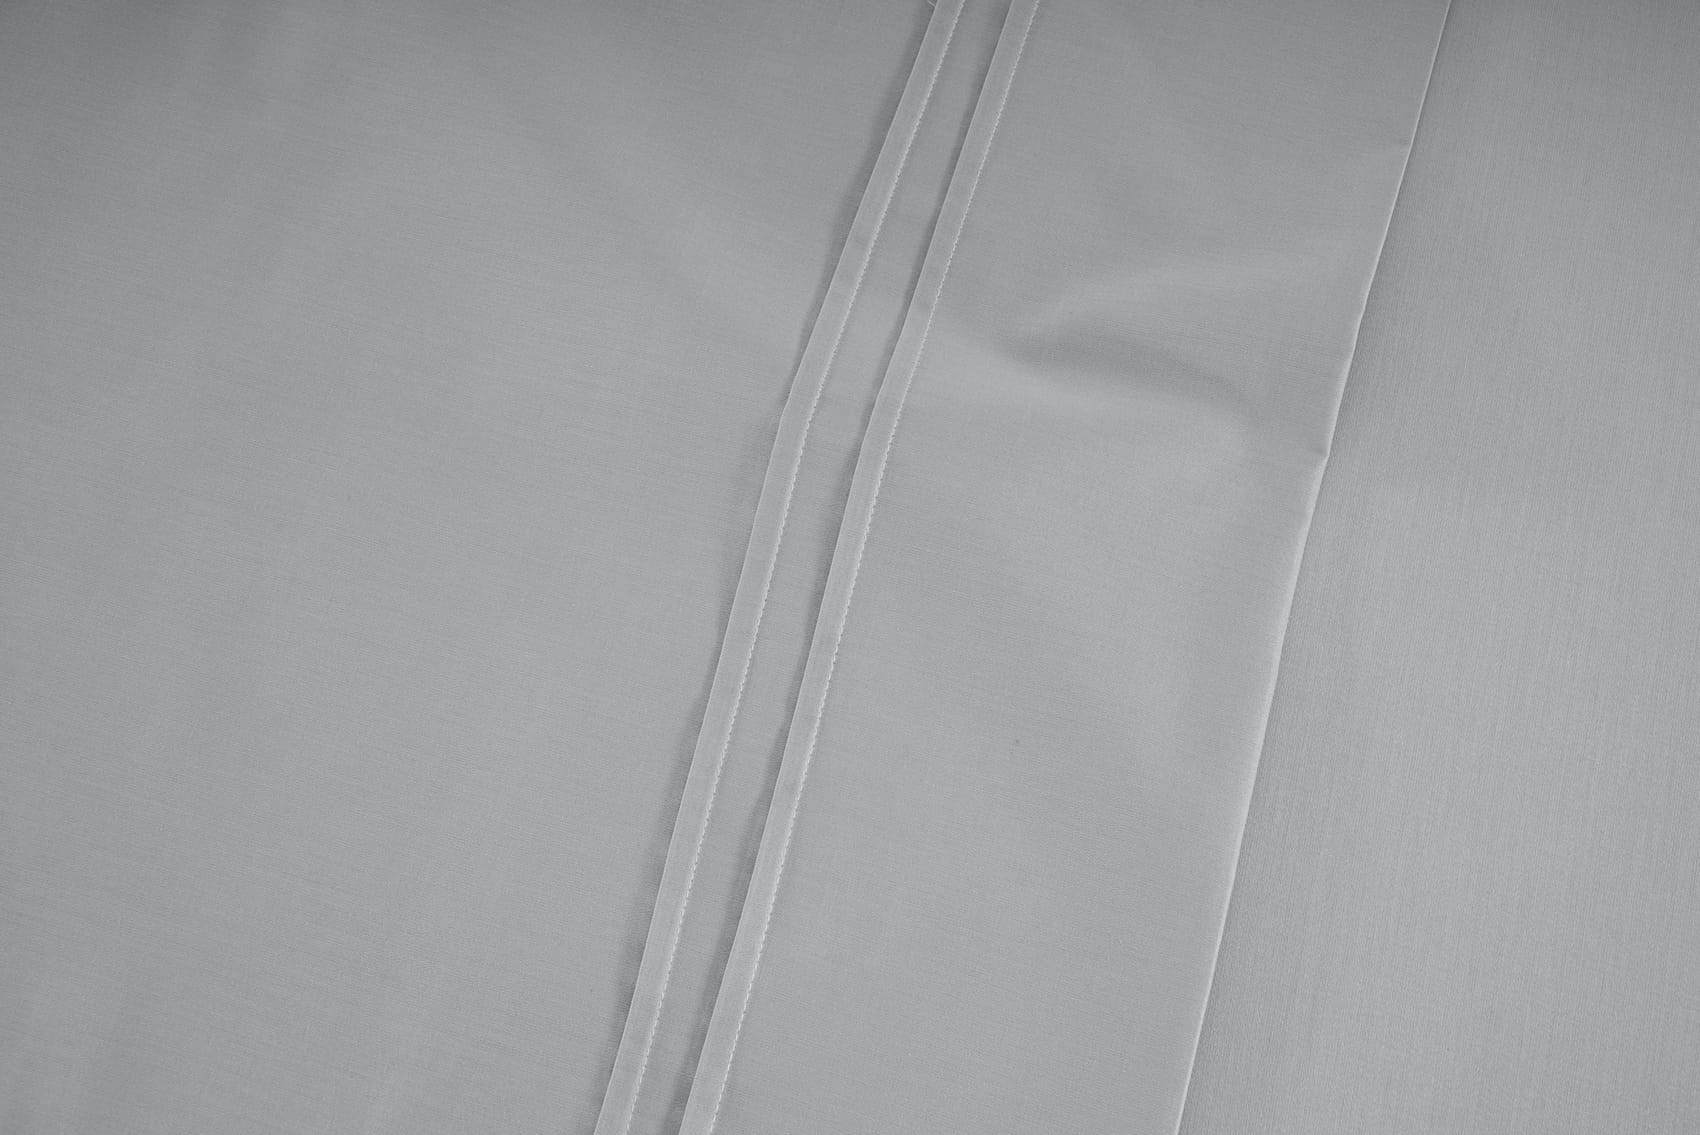 Cotton Satin 400 TC Designer Pillow Covers, Silver